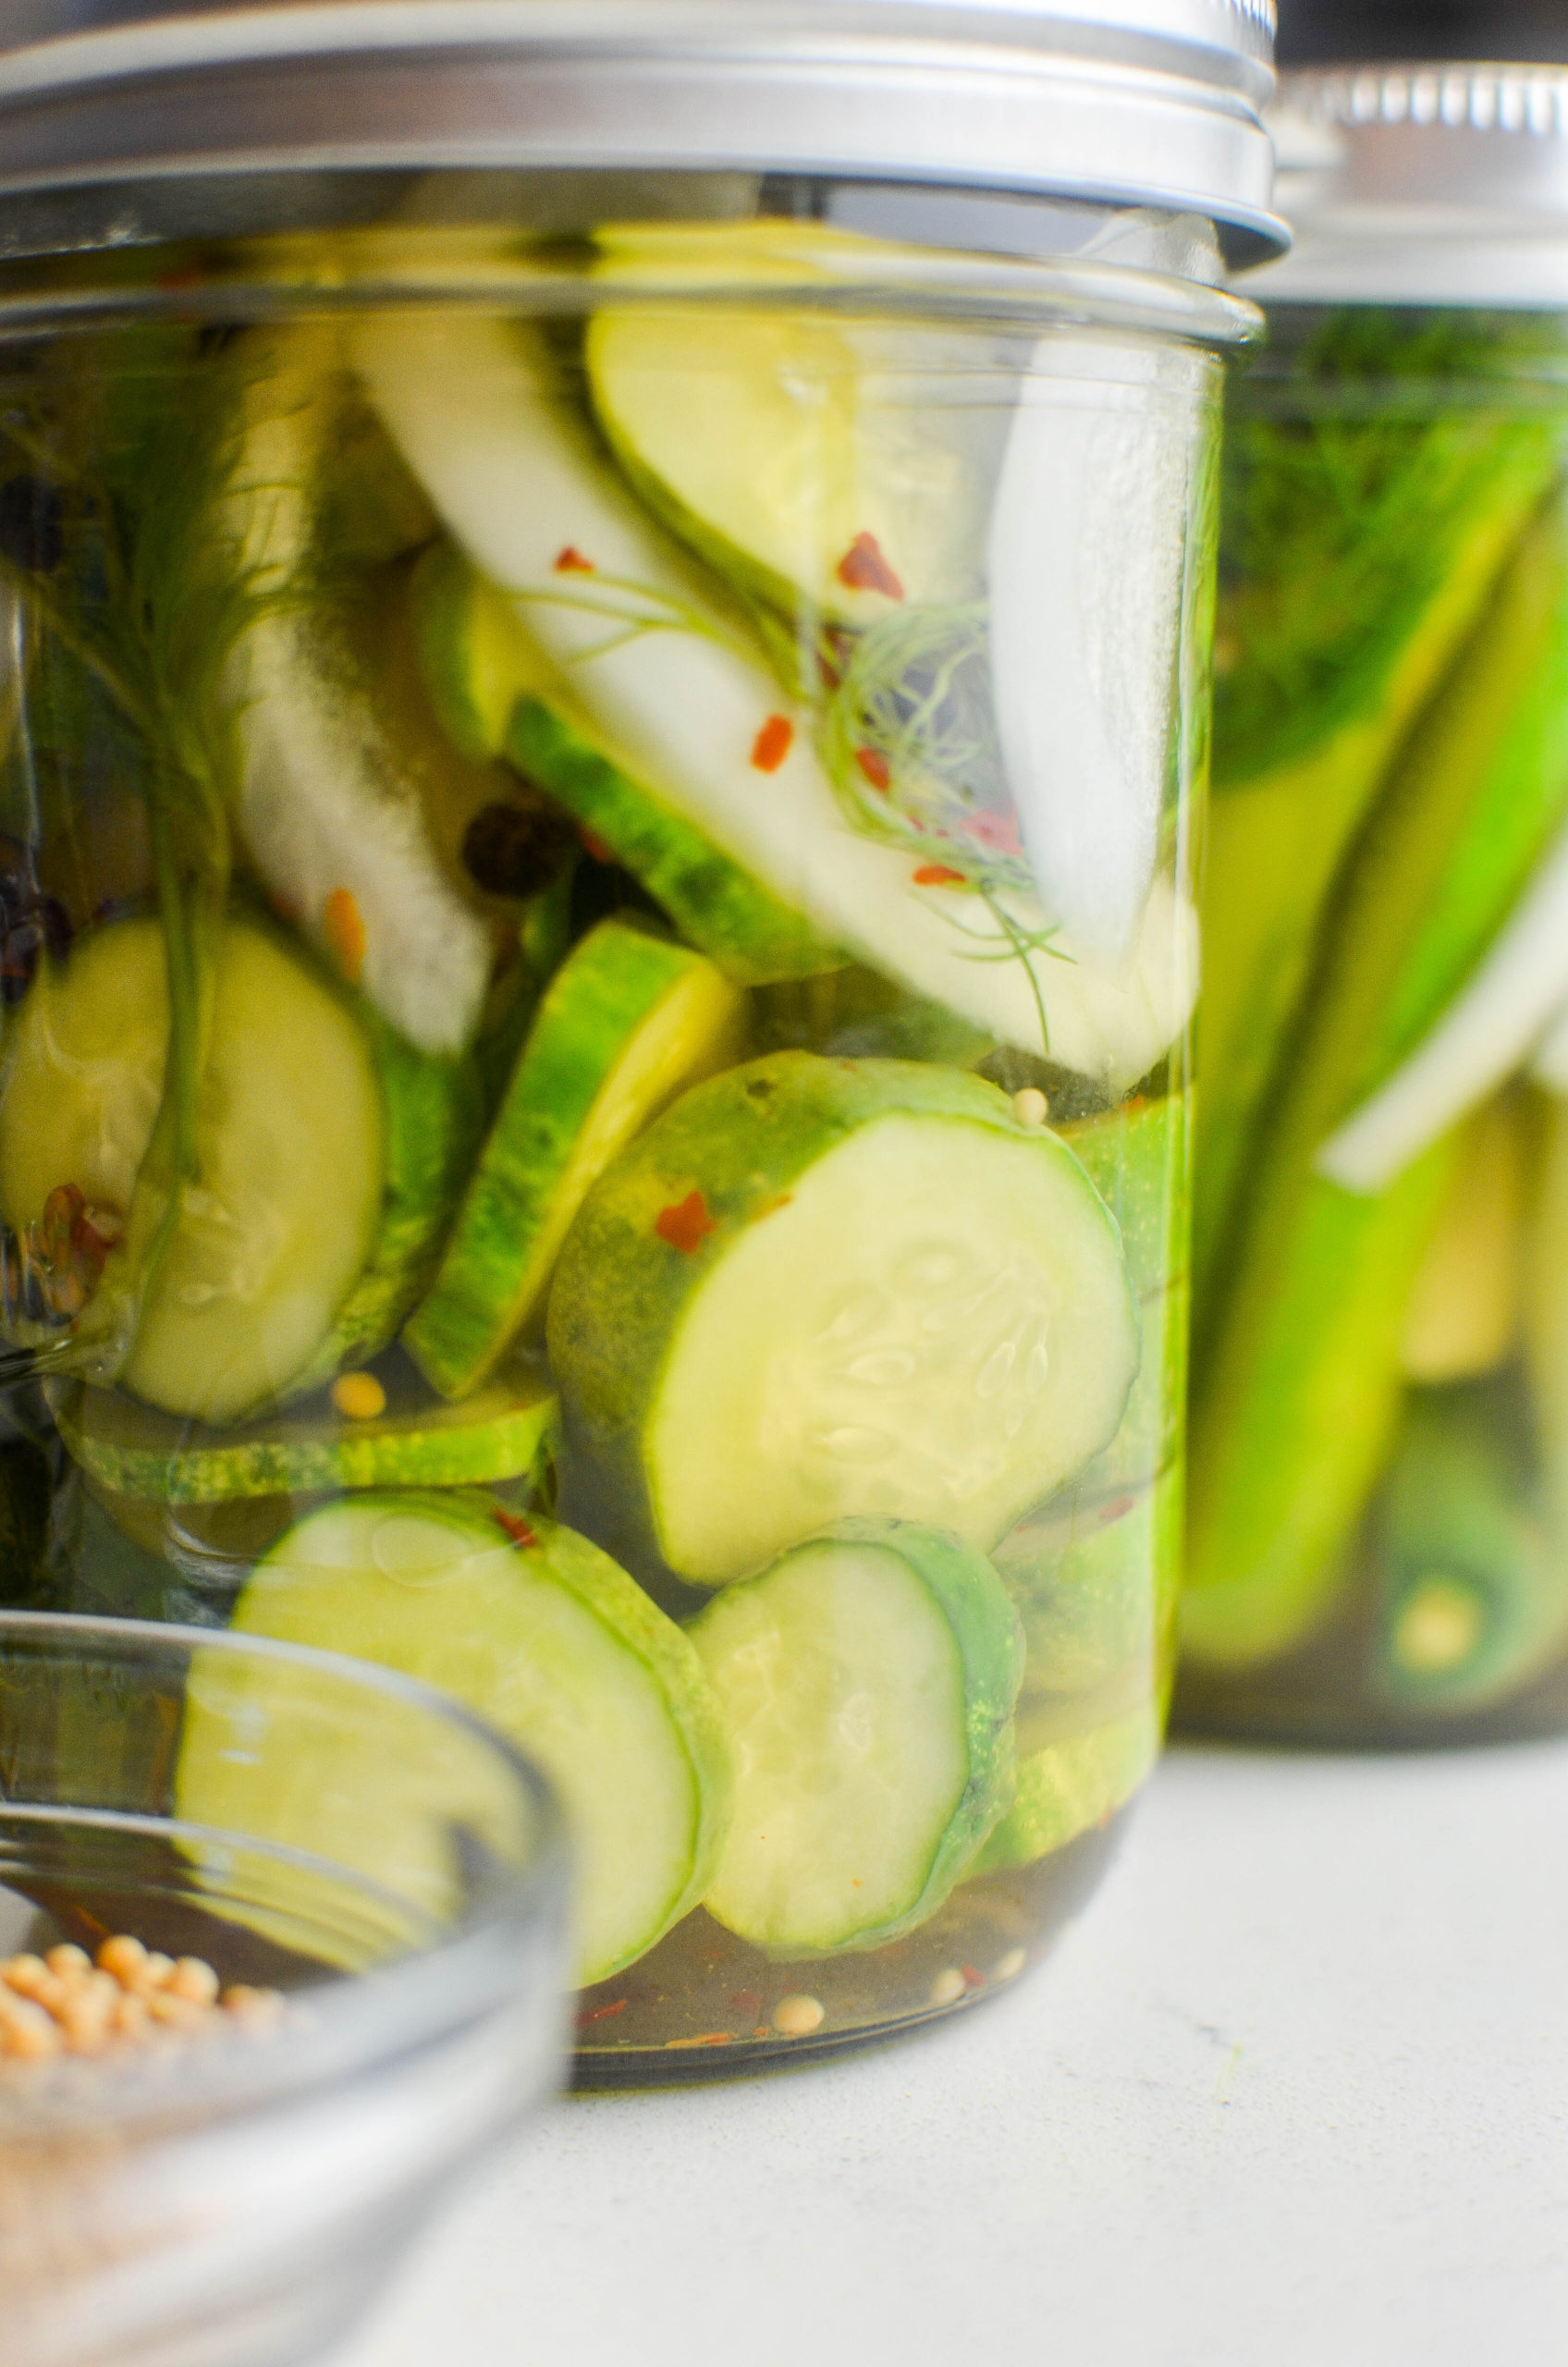 Refrigerator pickles in a glass jar. 